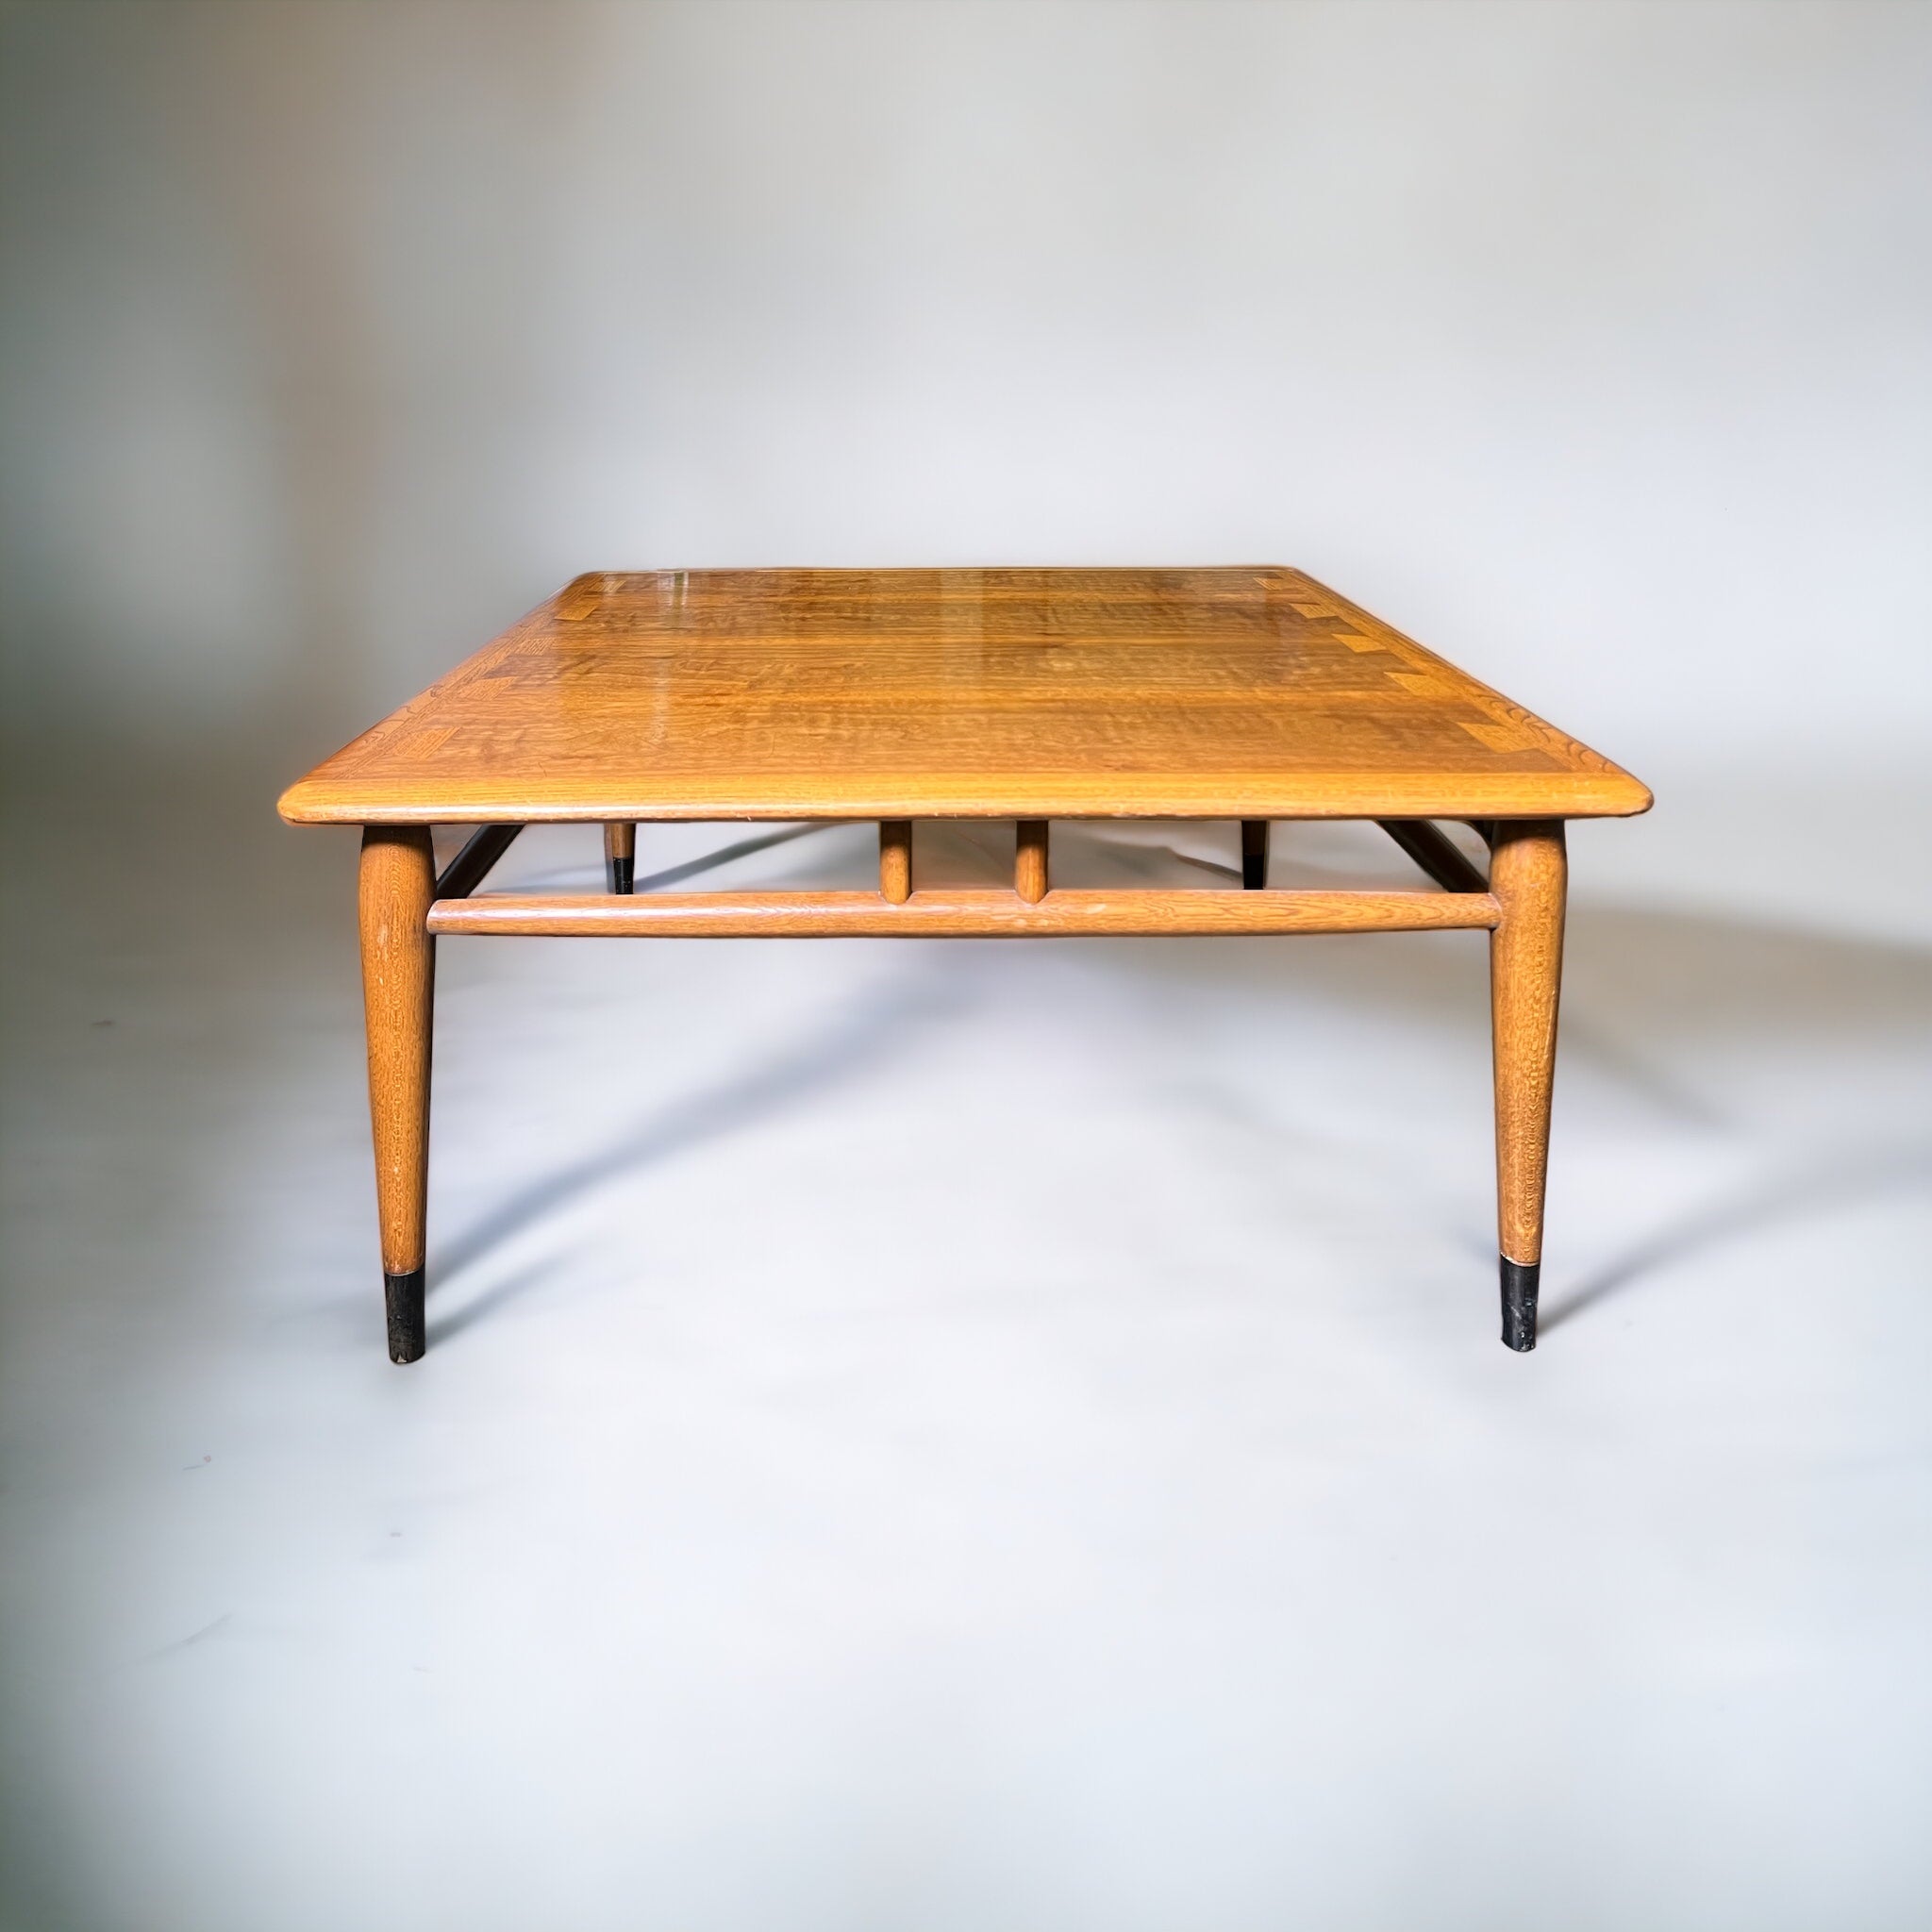 Wood “Lanes” Coffee Table